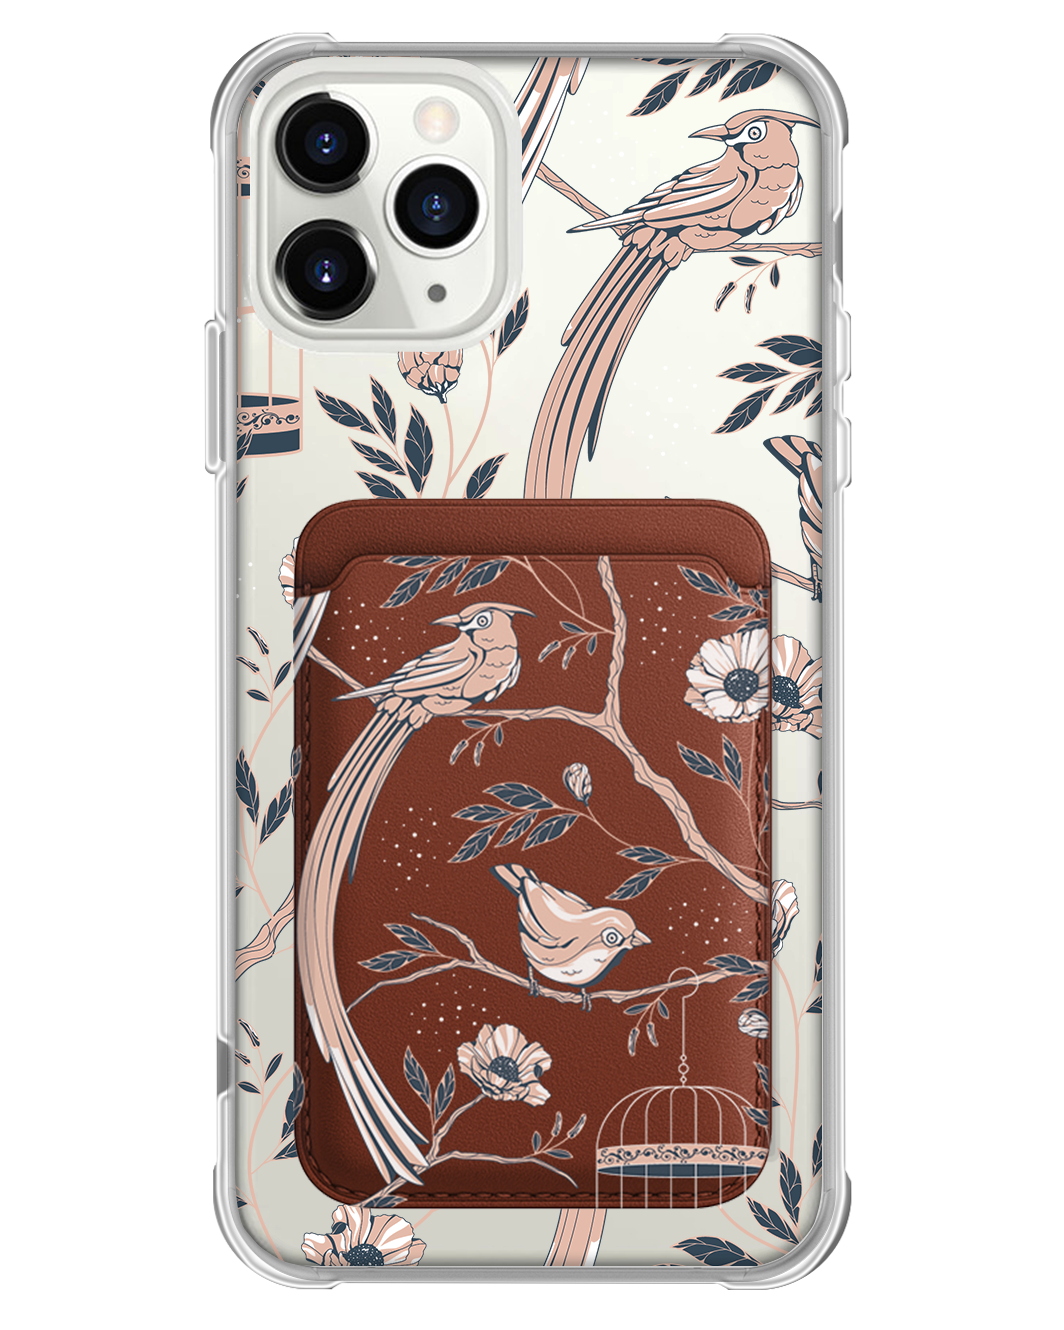 iPhone Magnetic Wallet Case - Lovebird 2.0